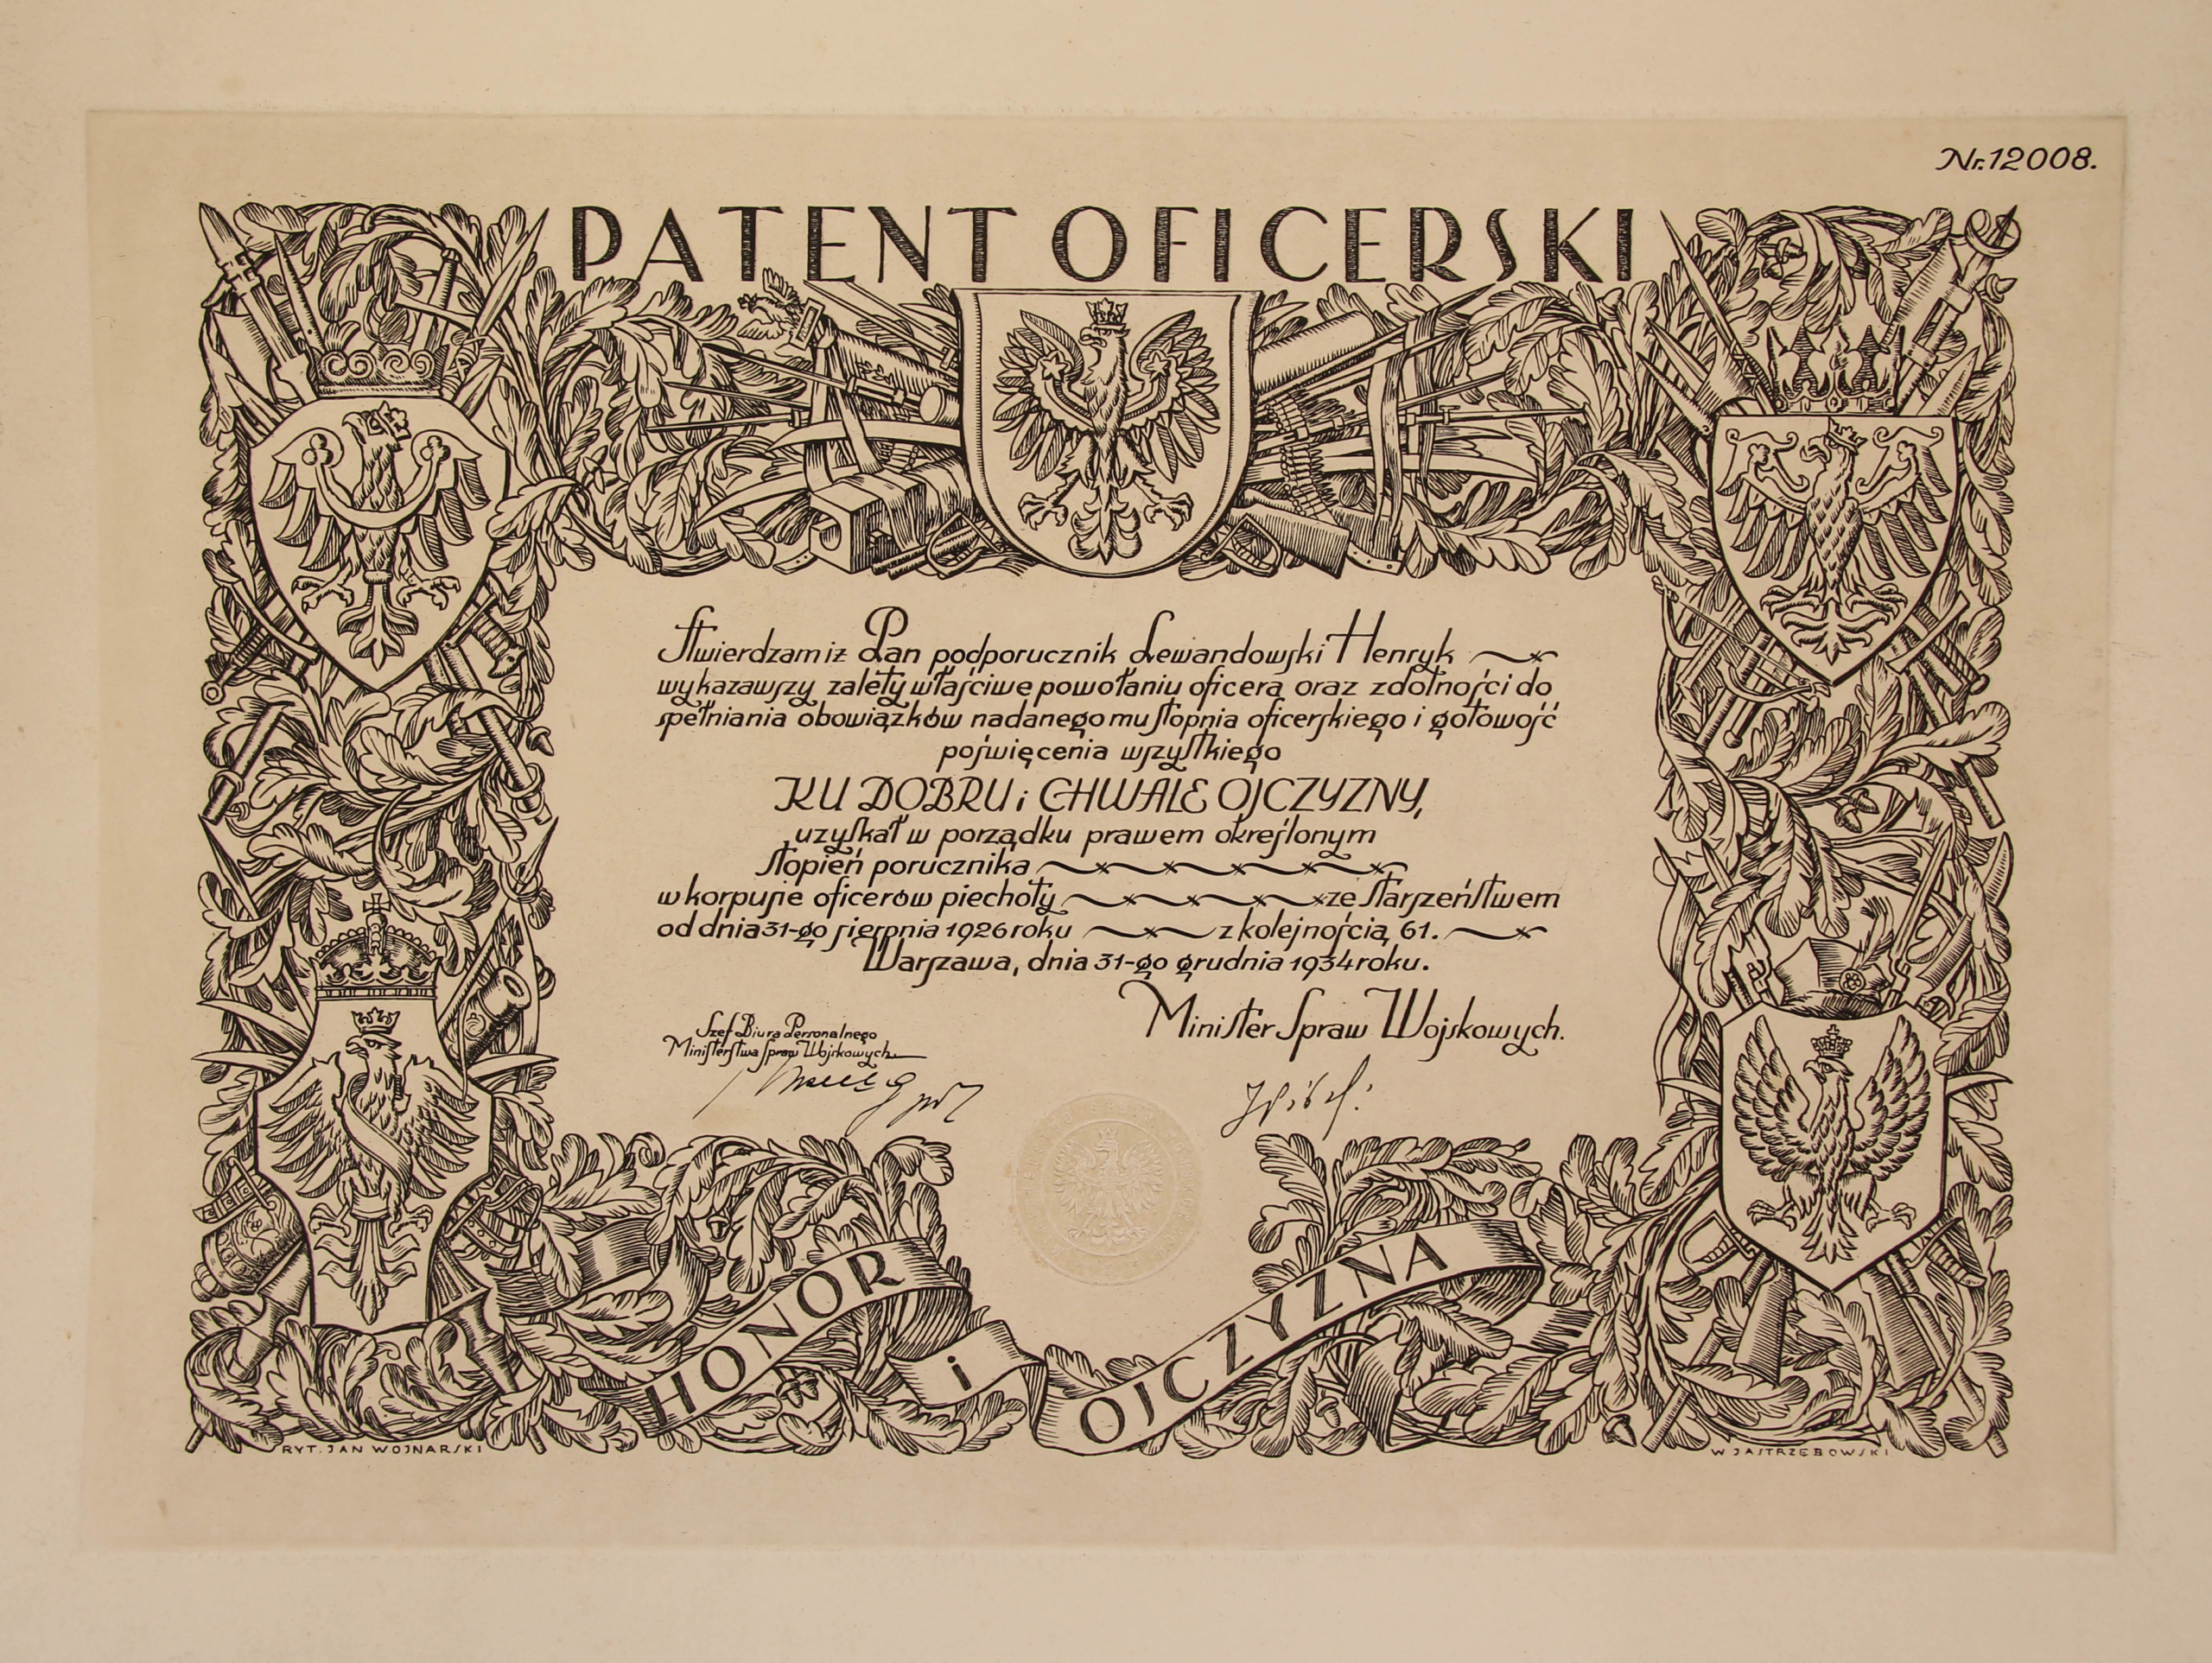 2. Patent